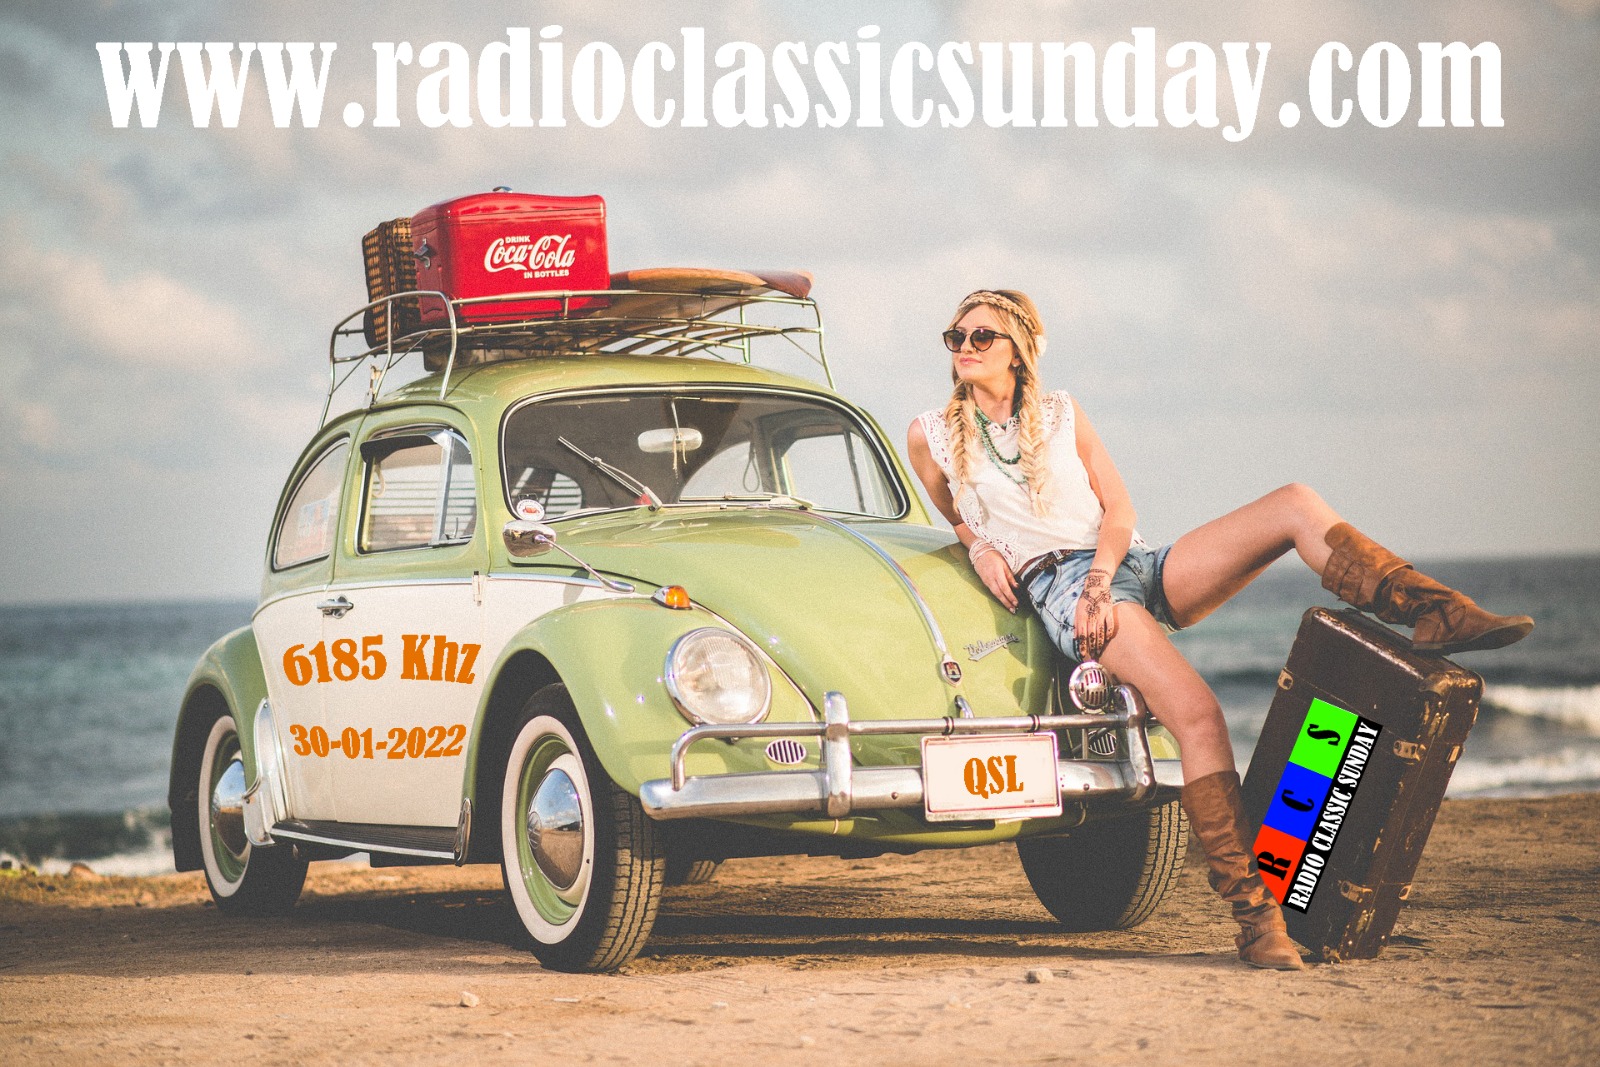 RADIO CLASSIC SUNDAY